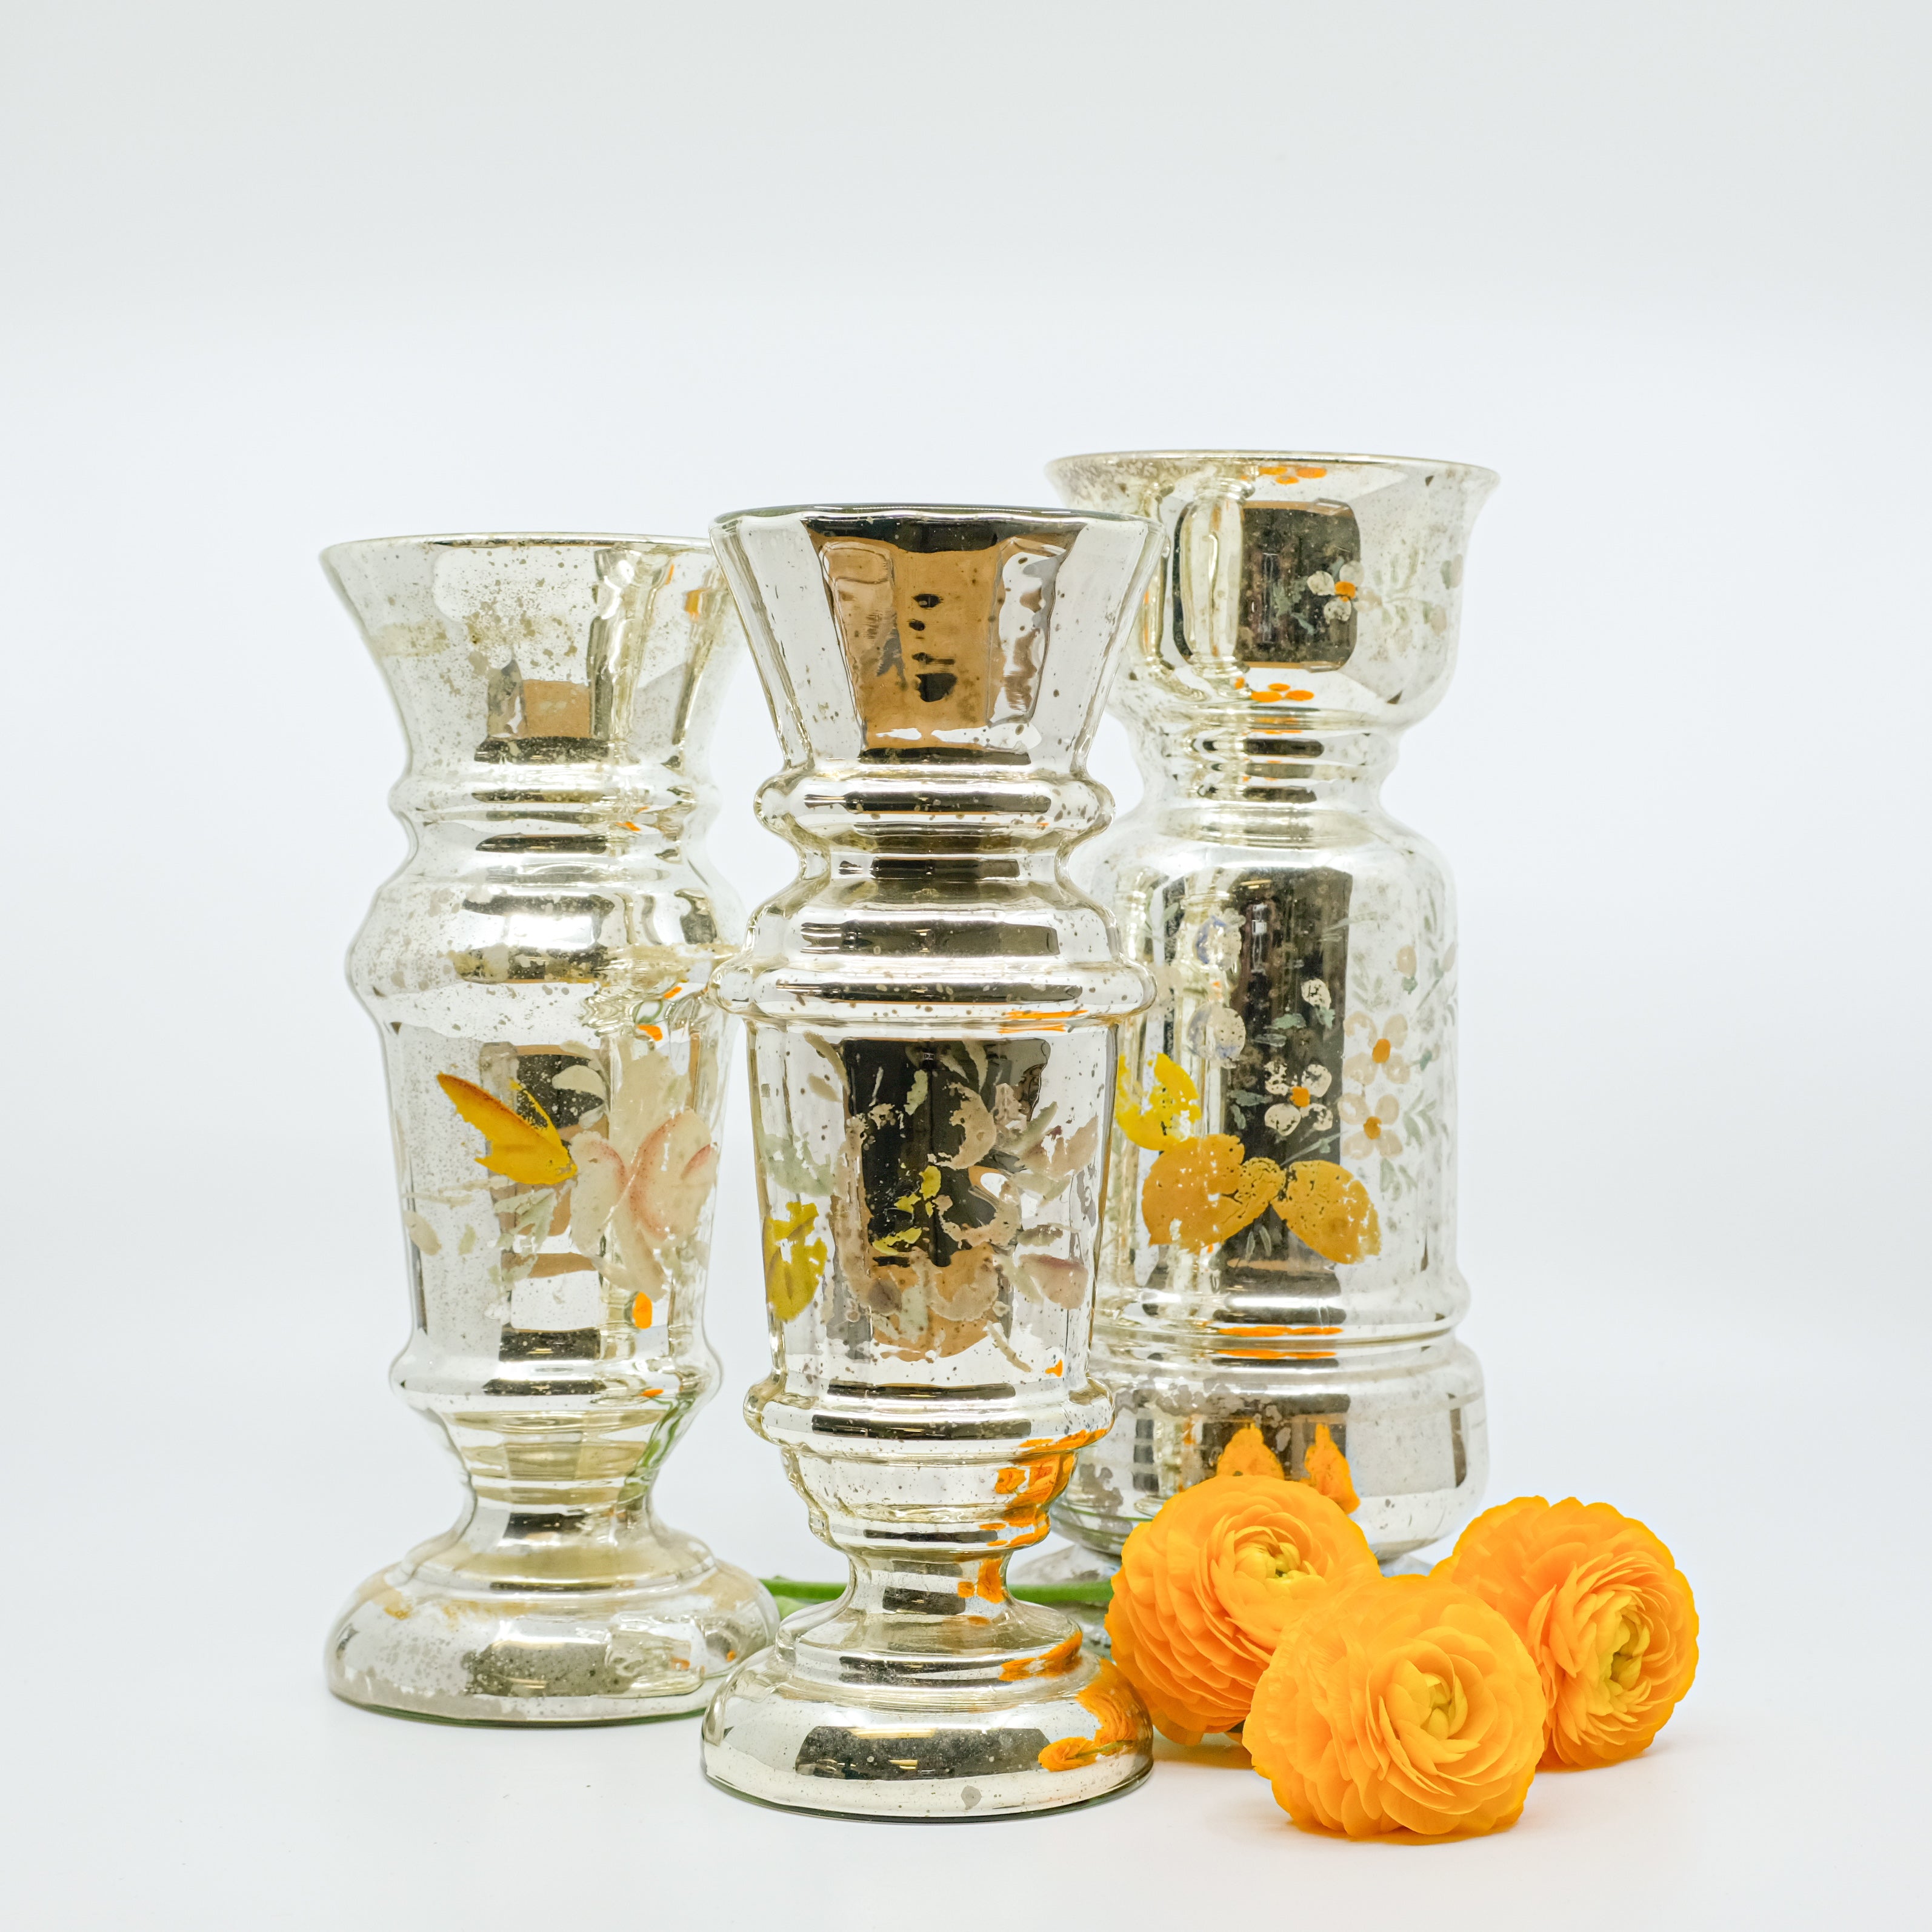 trio of mercury glass vases with ranunculuses